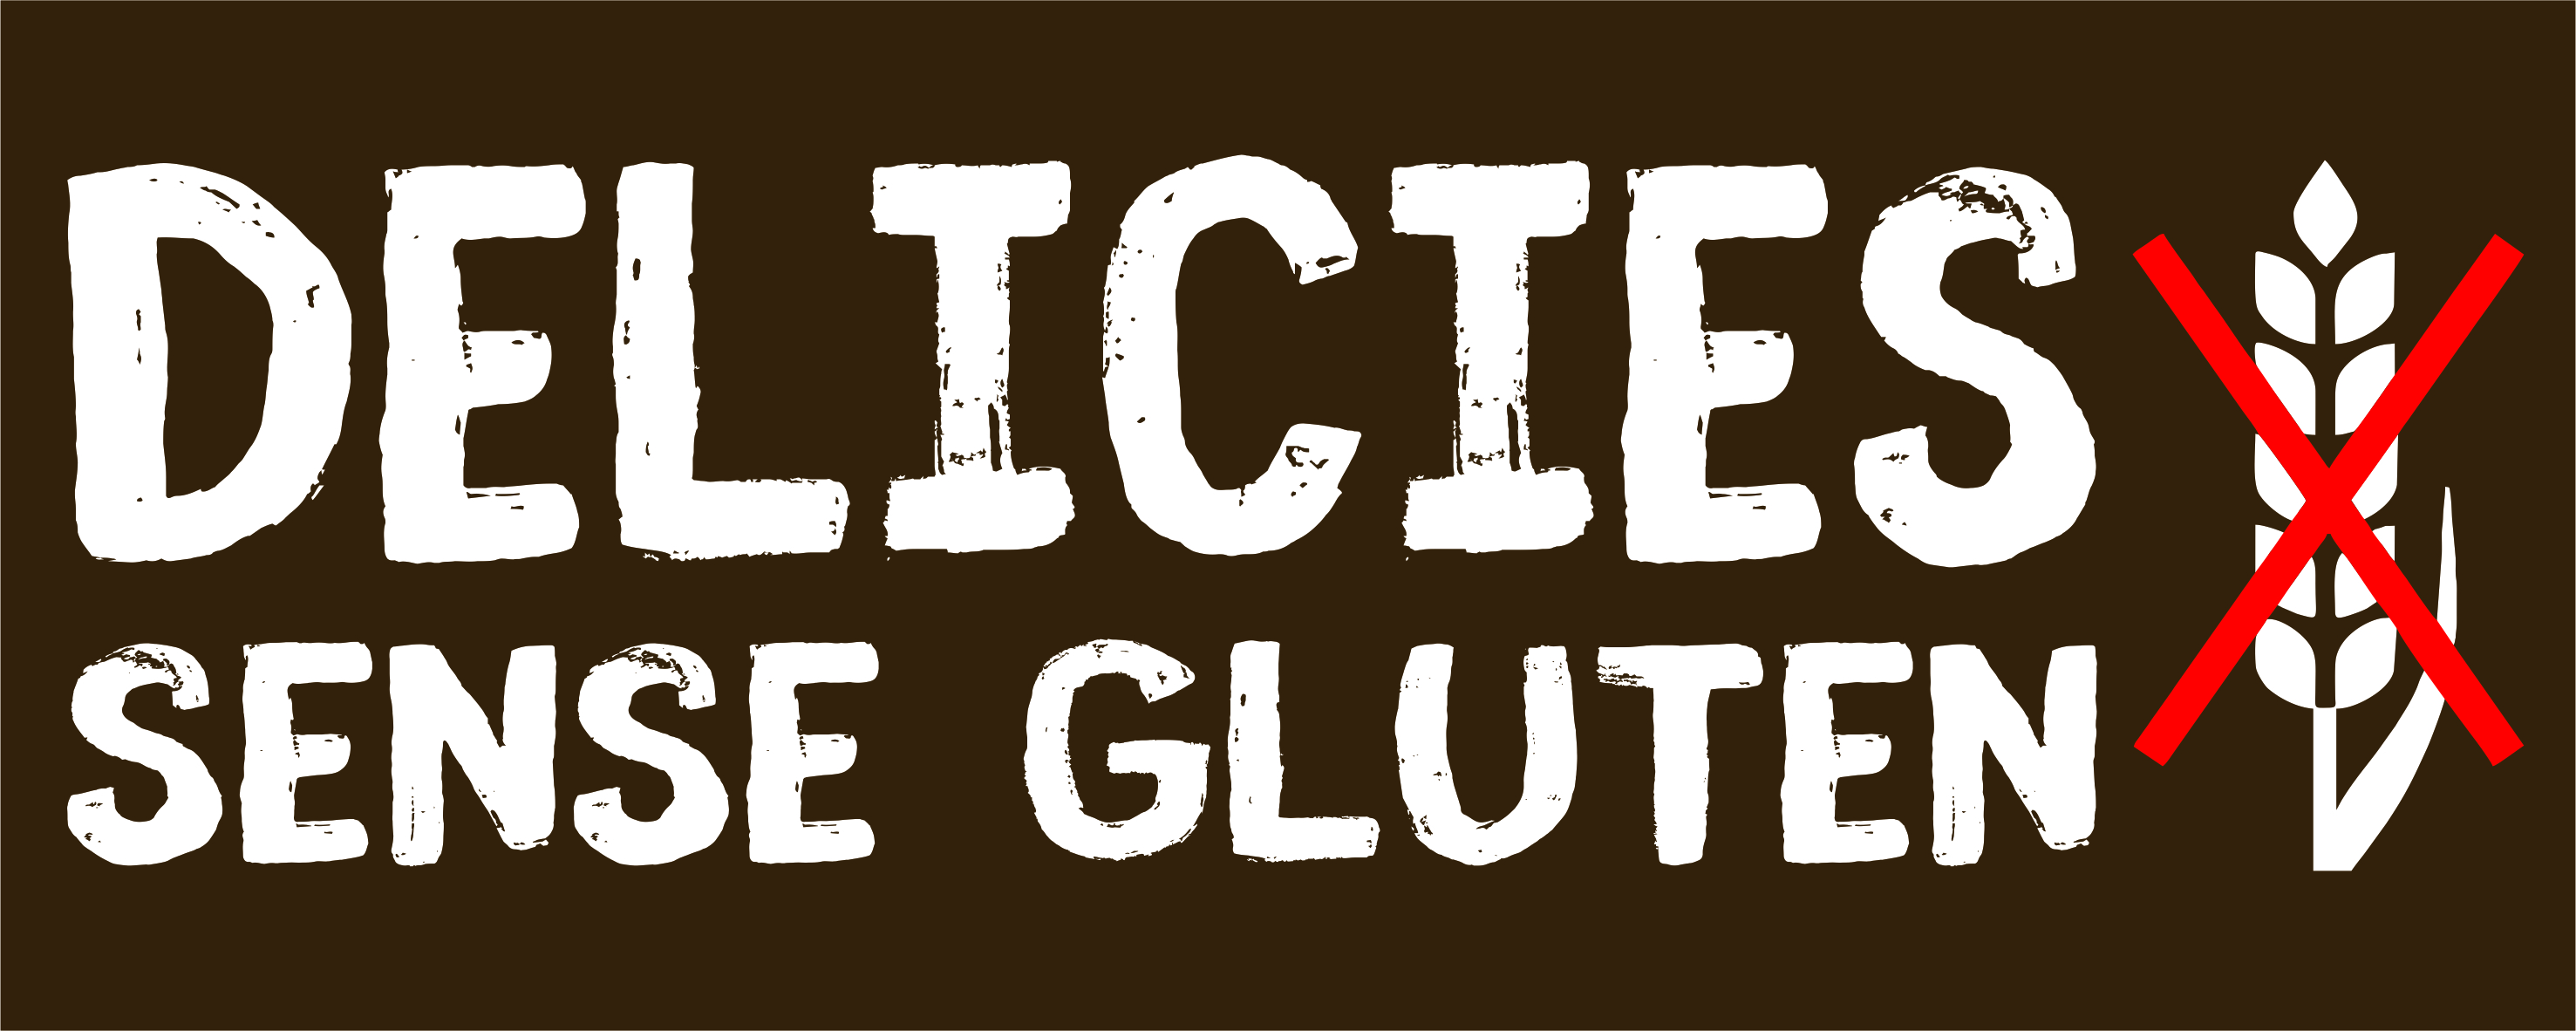 Delicies sense gluten logo